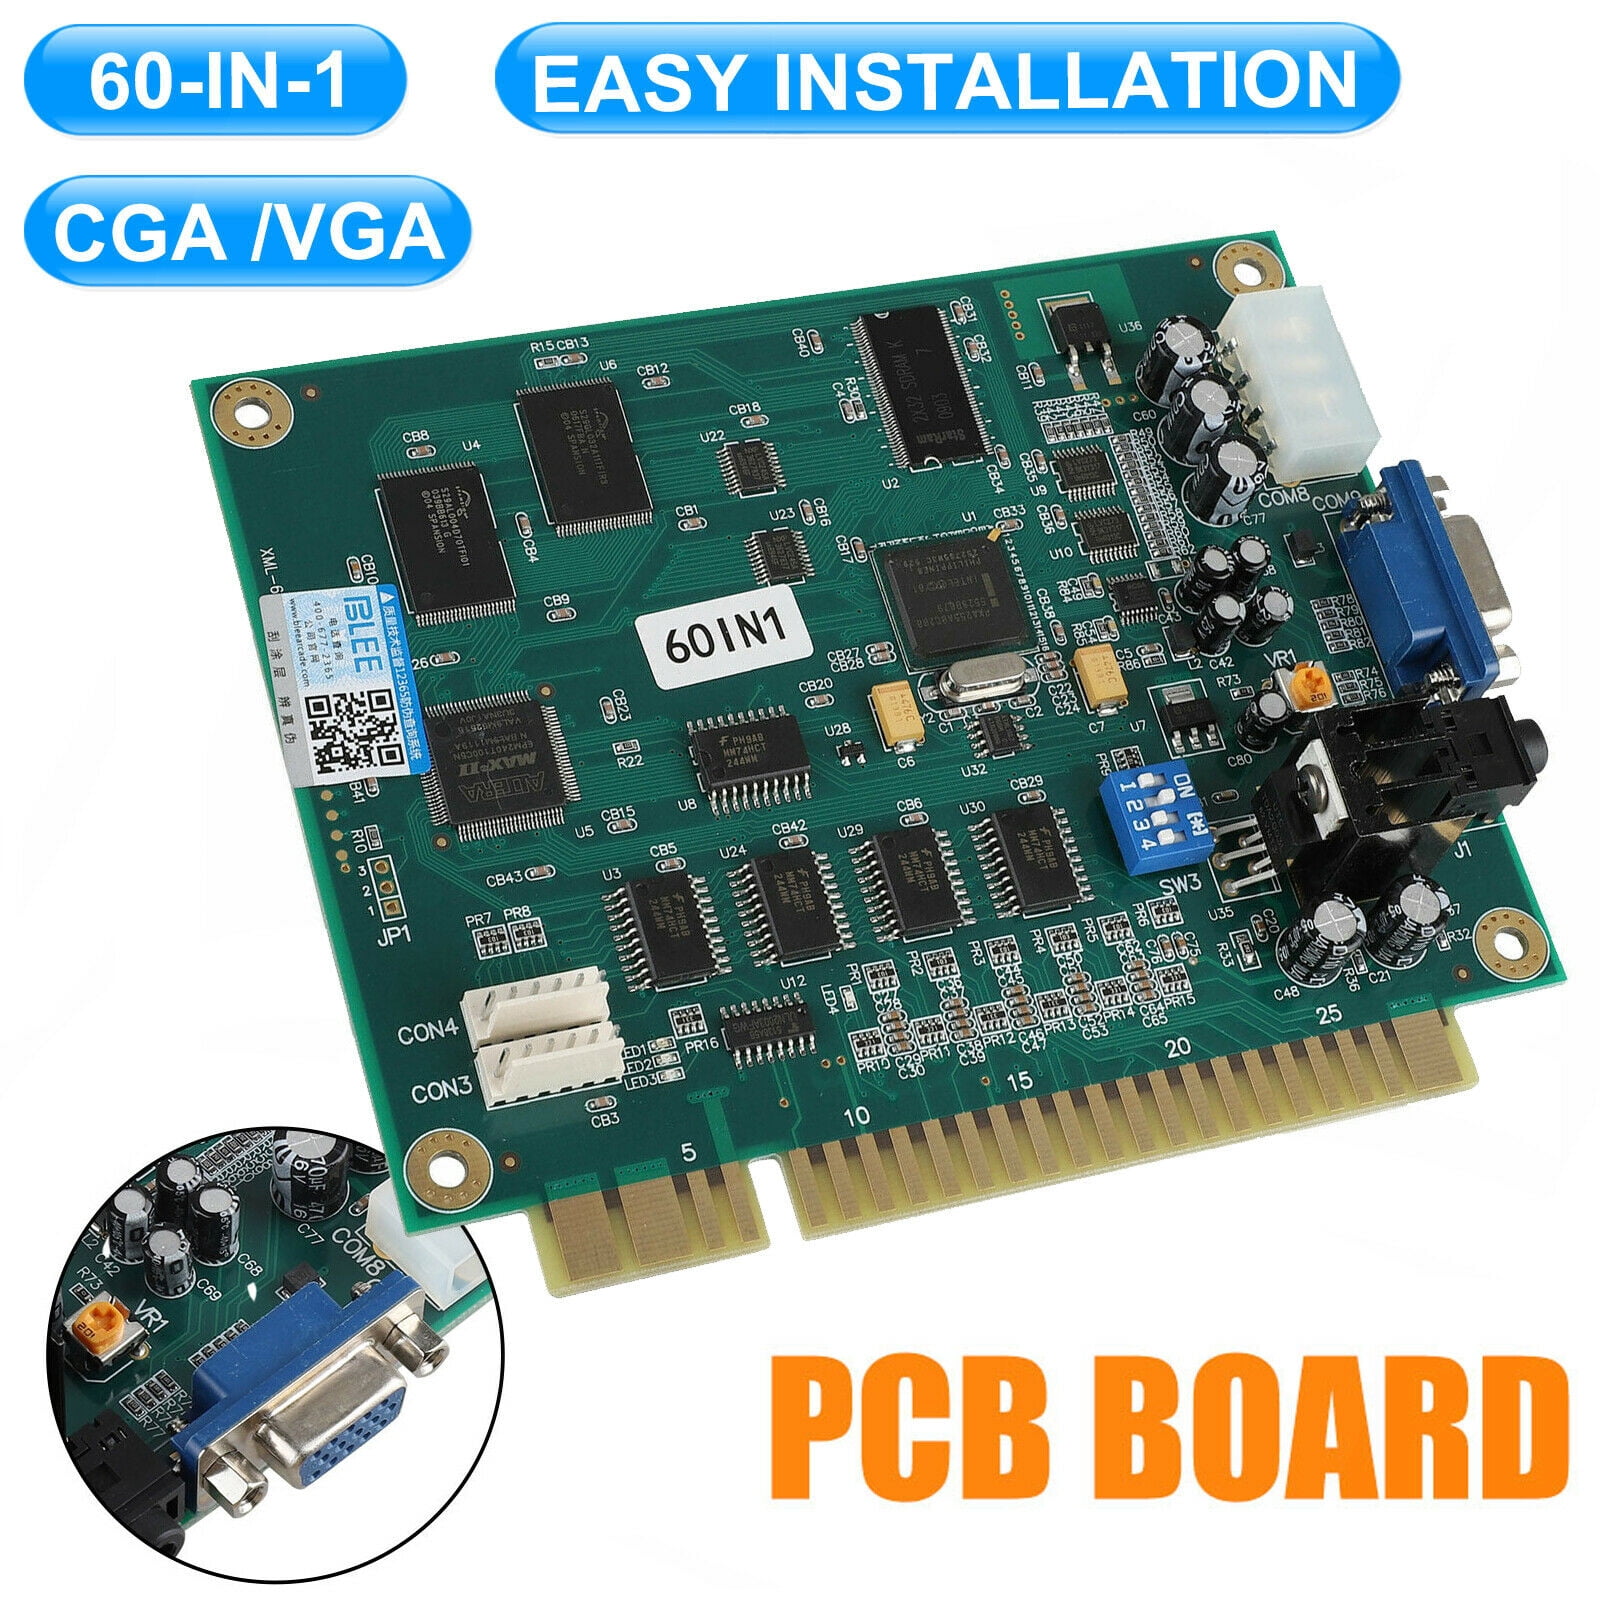 60 In 1 Multicade PCB Board CGA/VGA Output for Classic Jamma Arcade Video Game